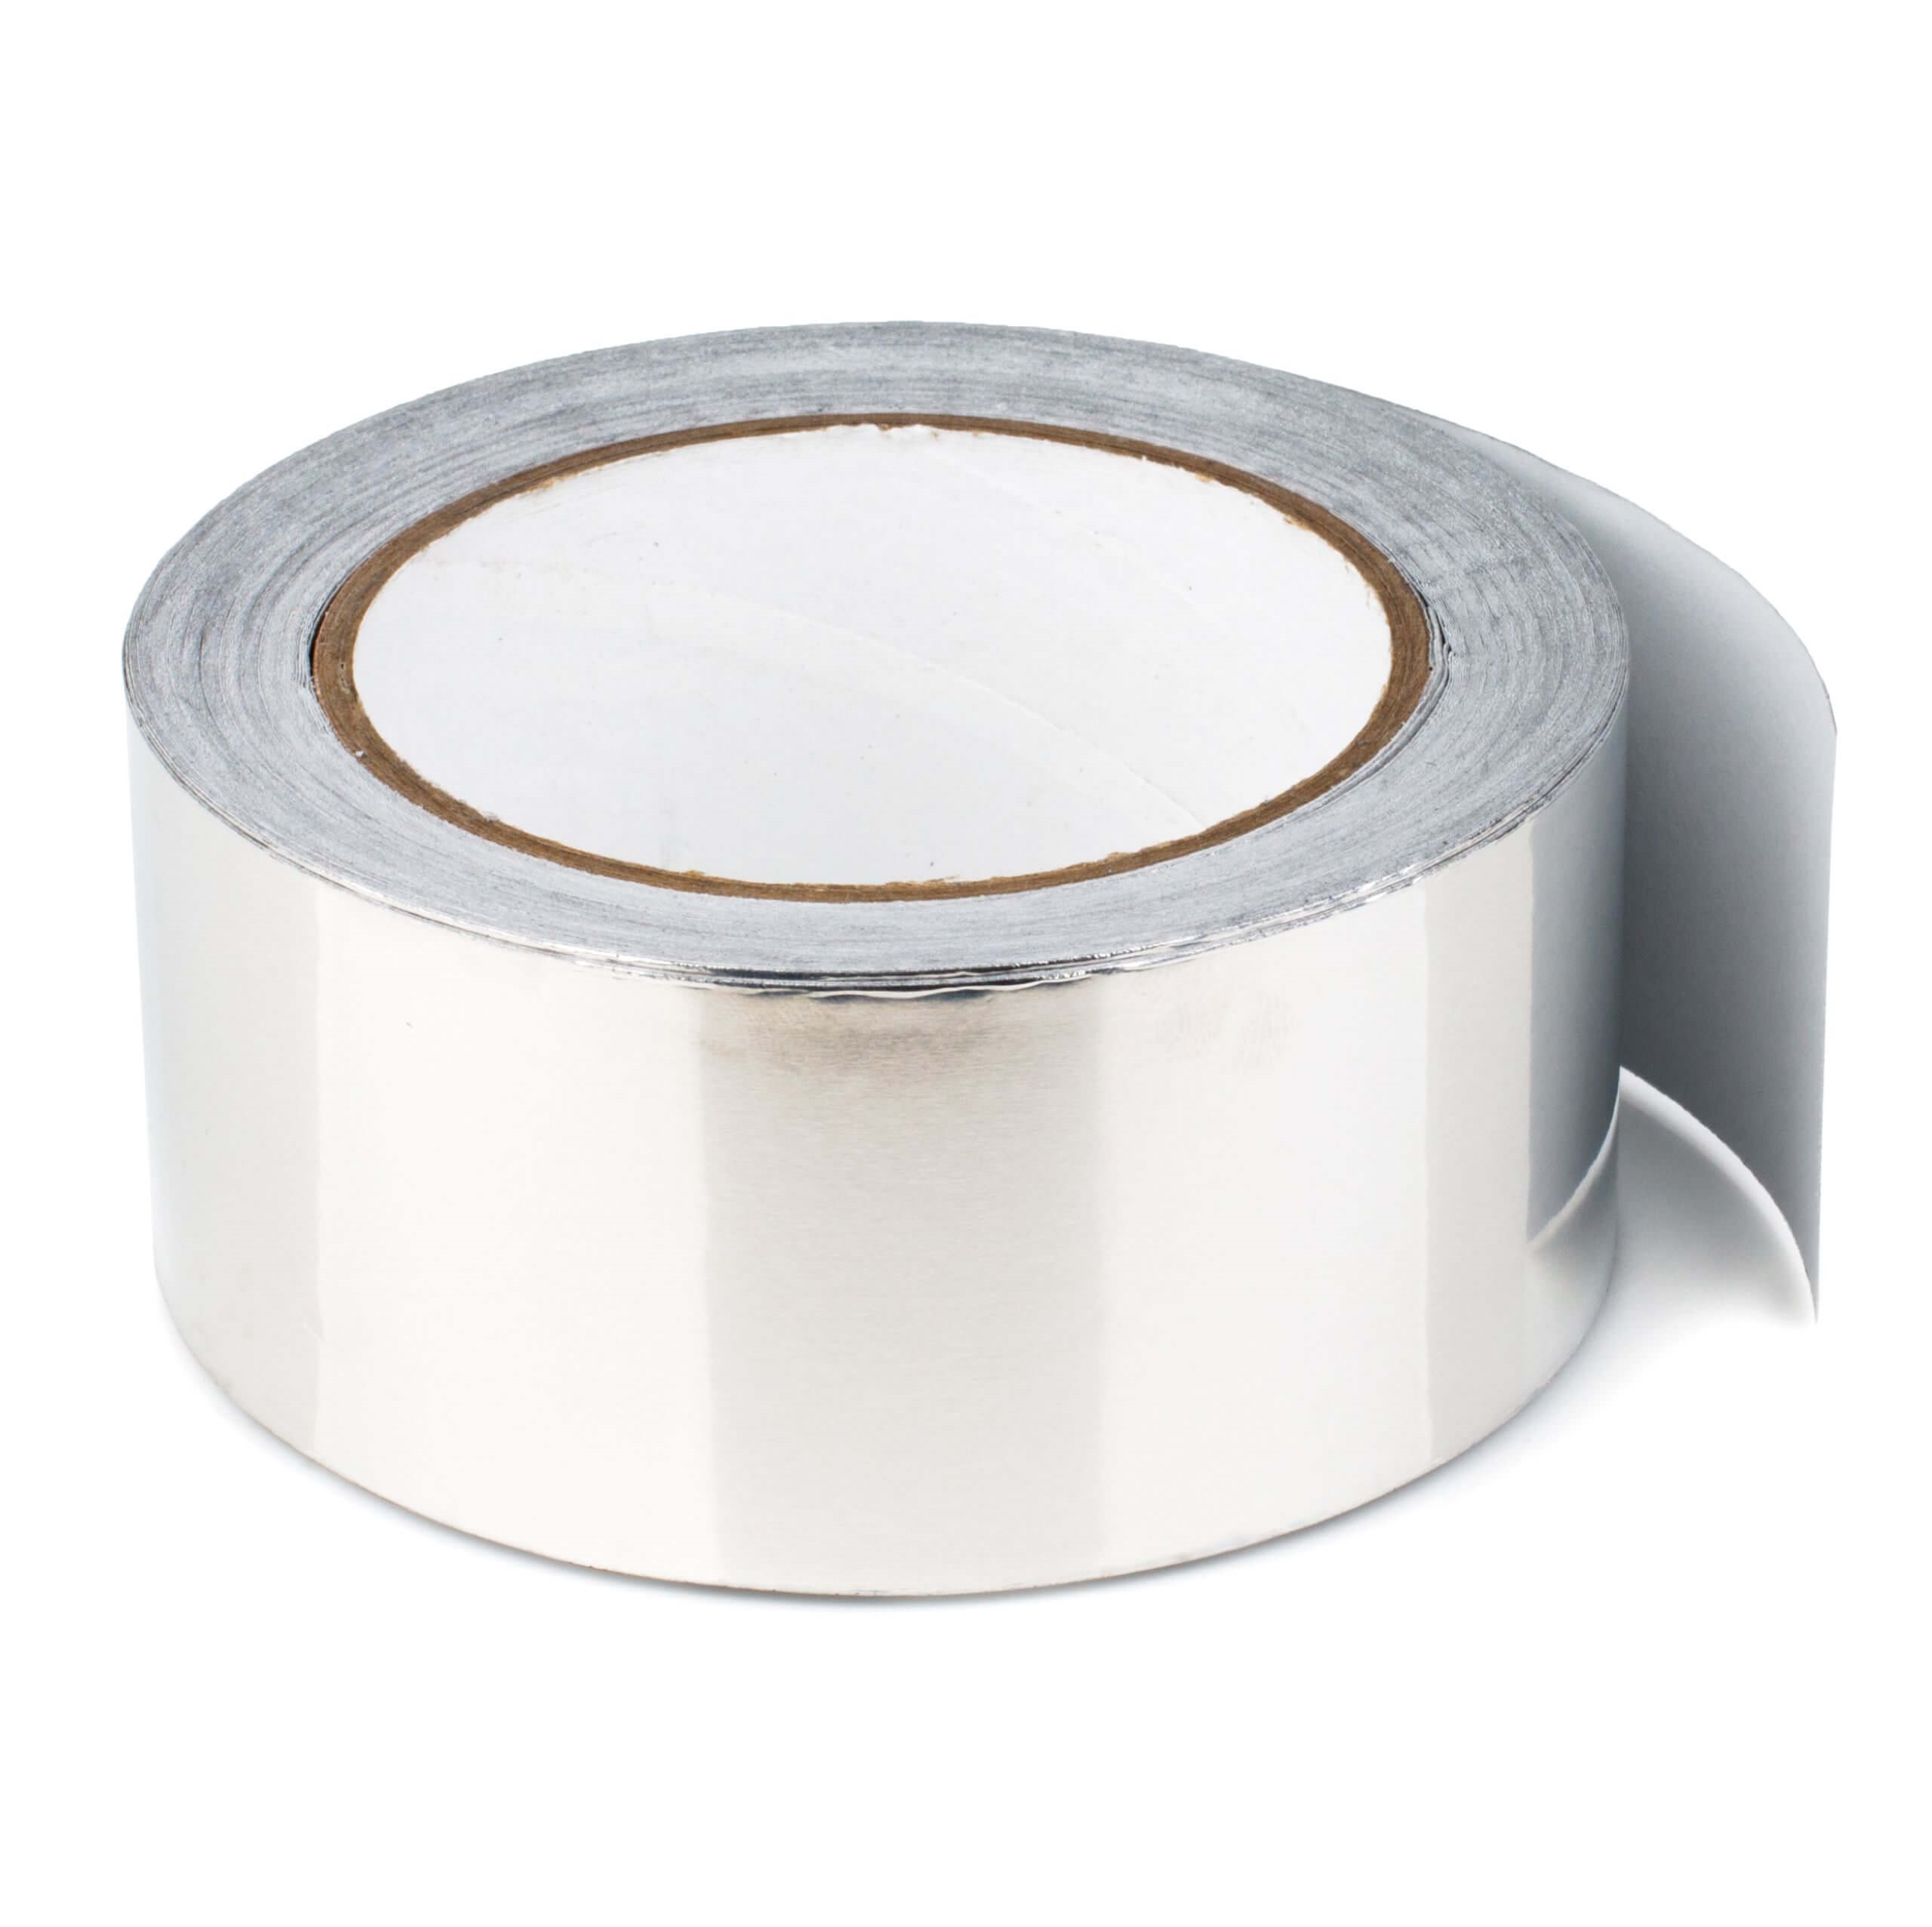 An image of aluminium adhesive tape.